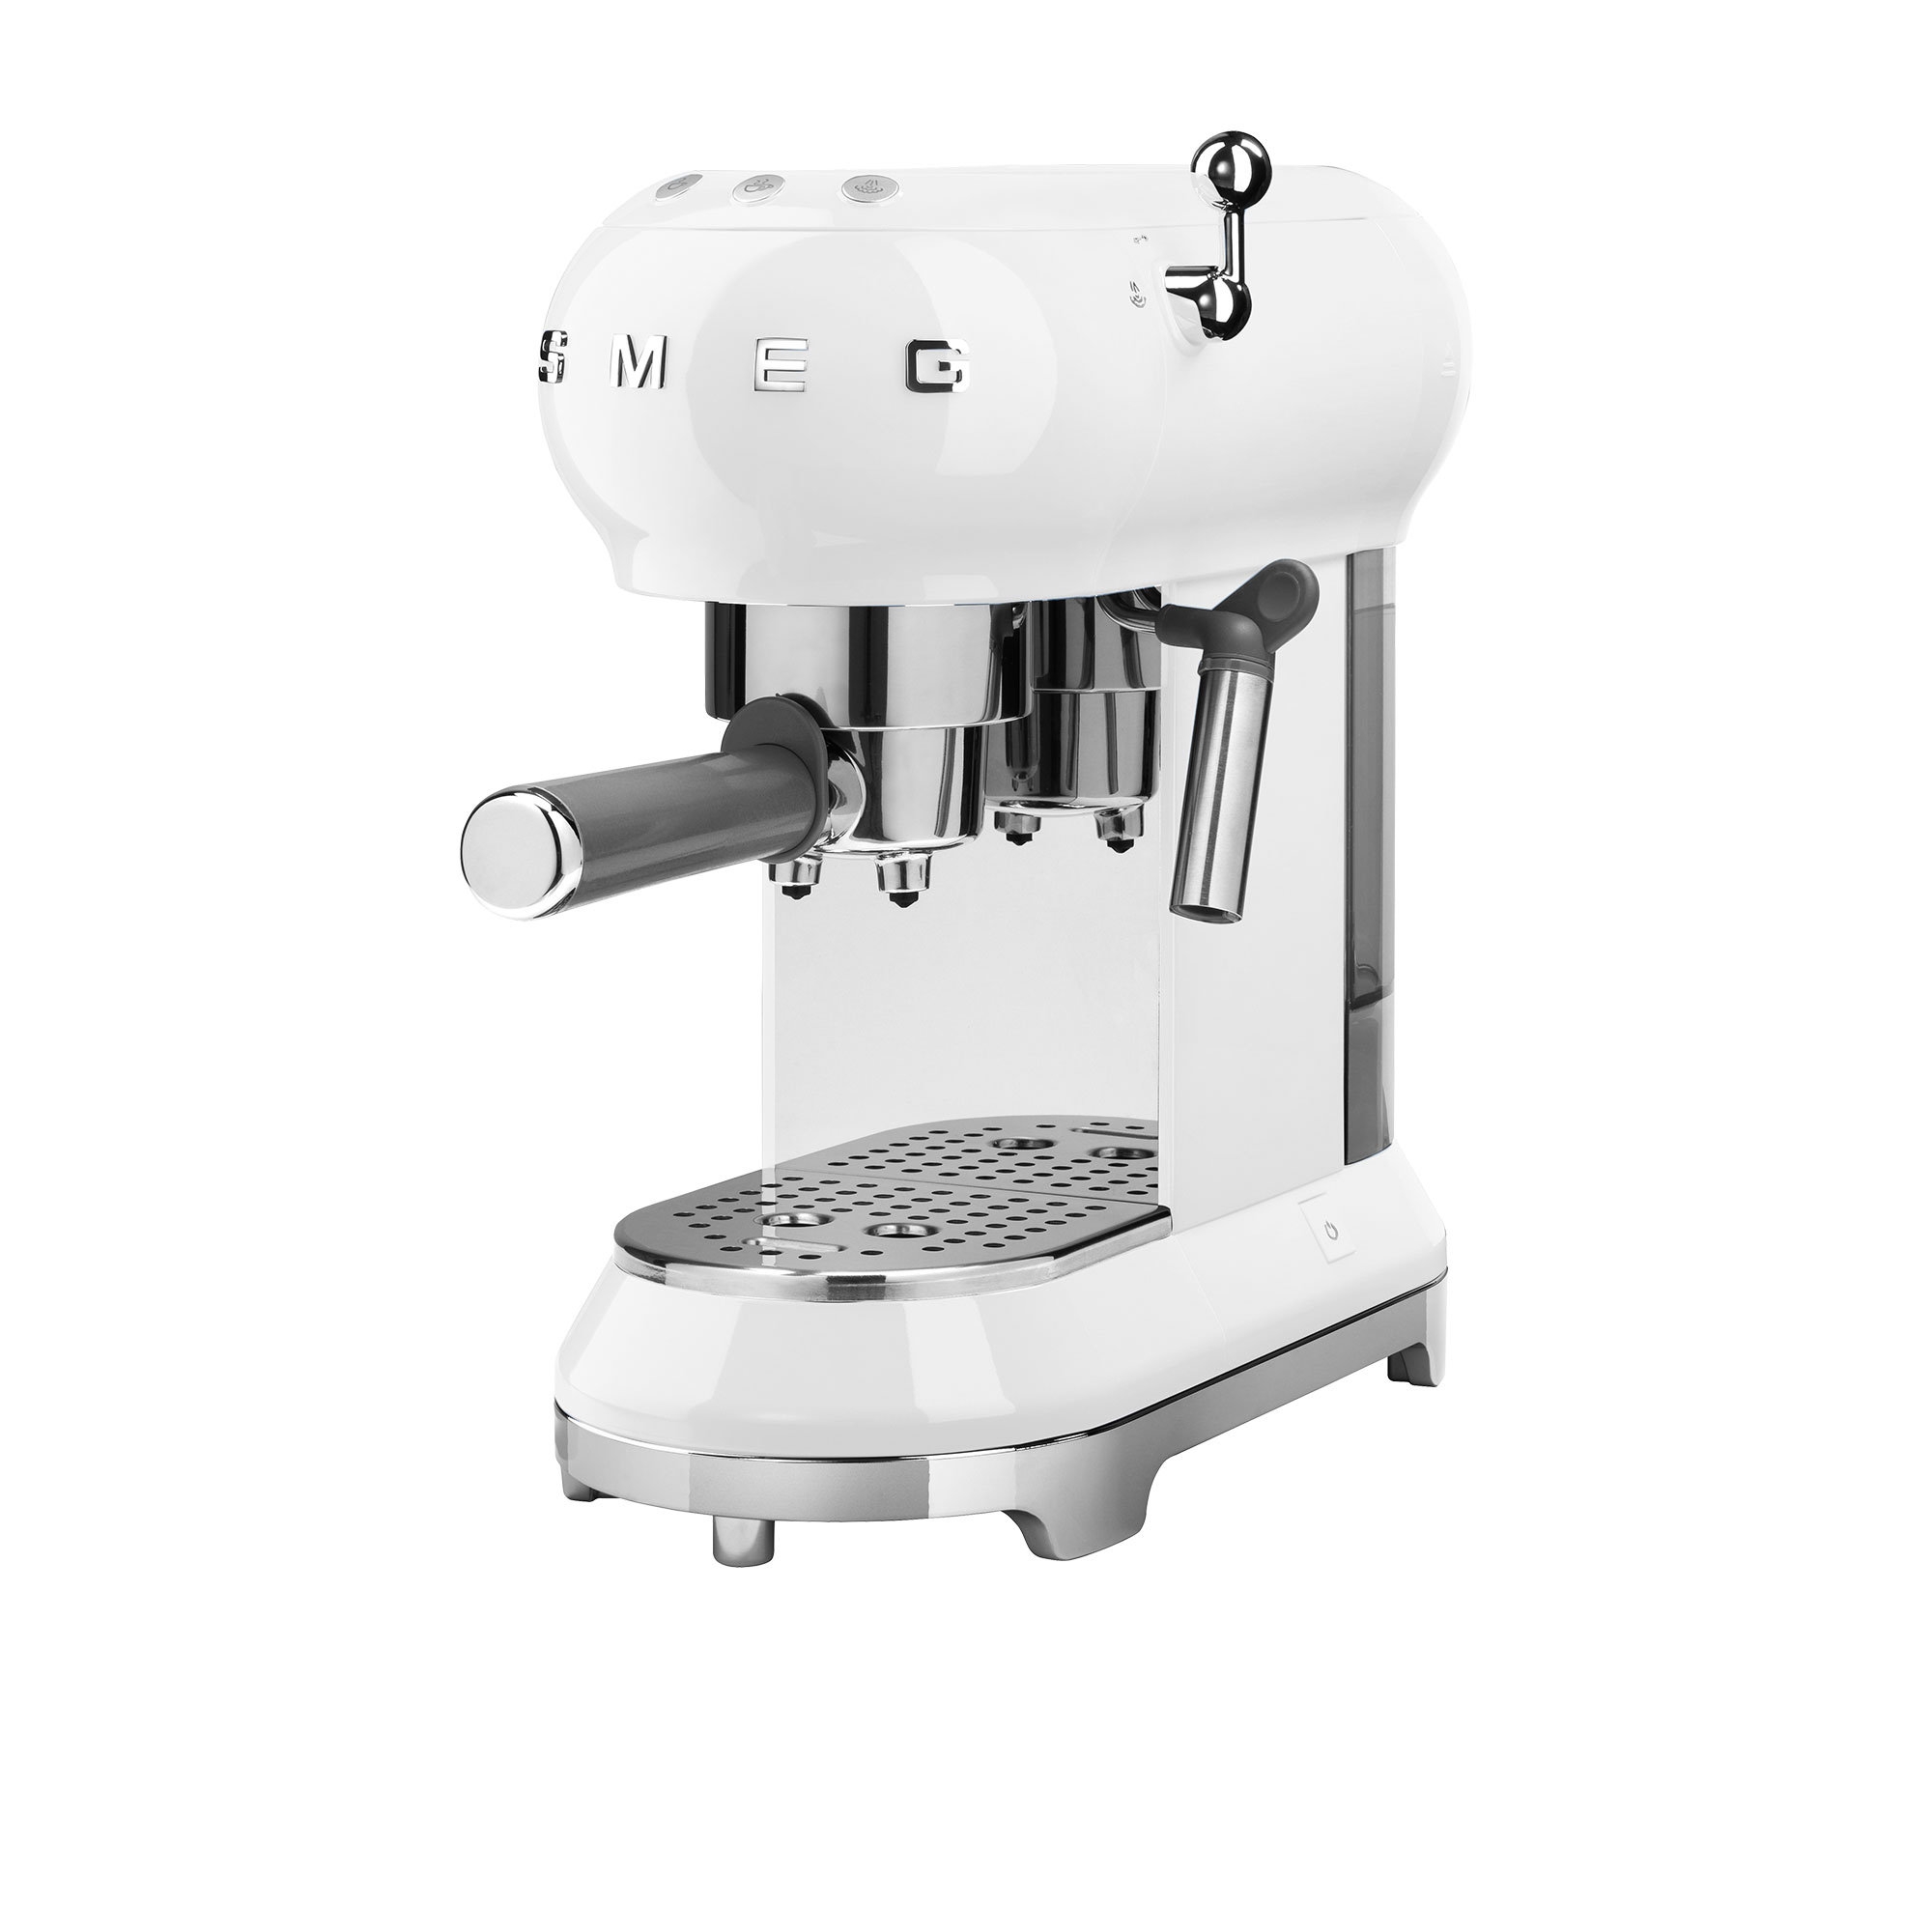 Smeg 50's Retro Style Espresso Coffee Machine White Image 2